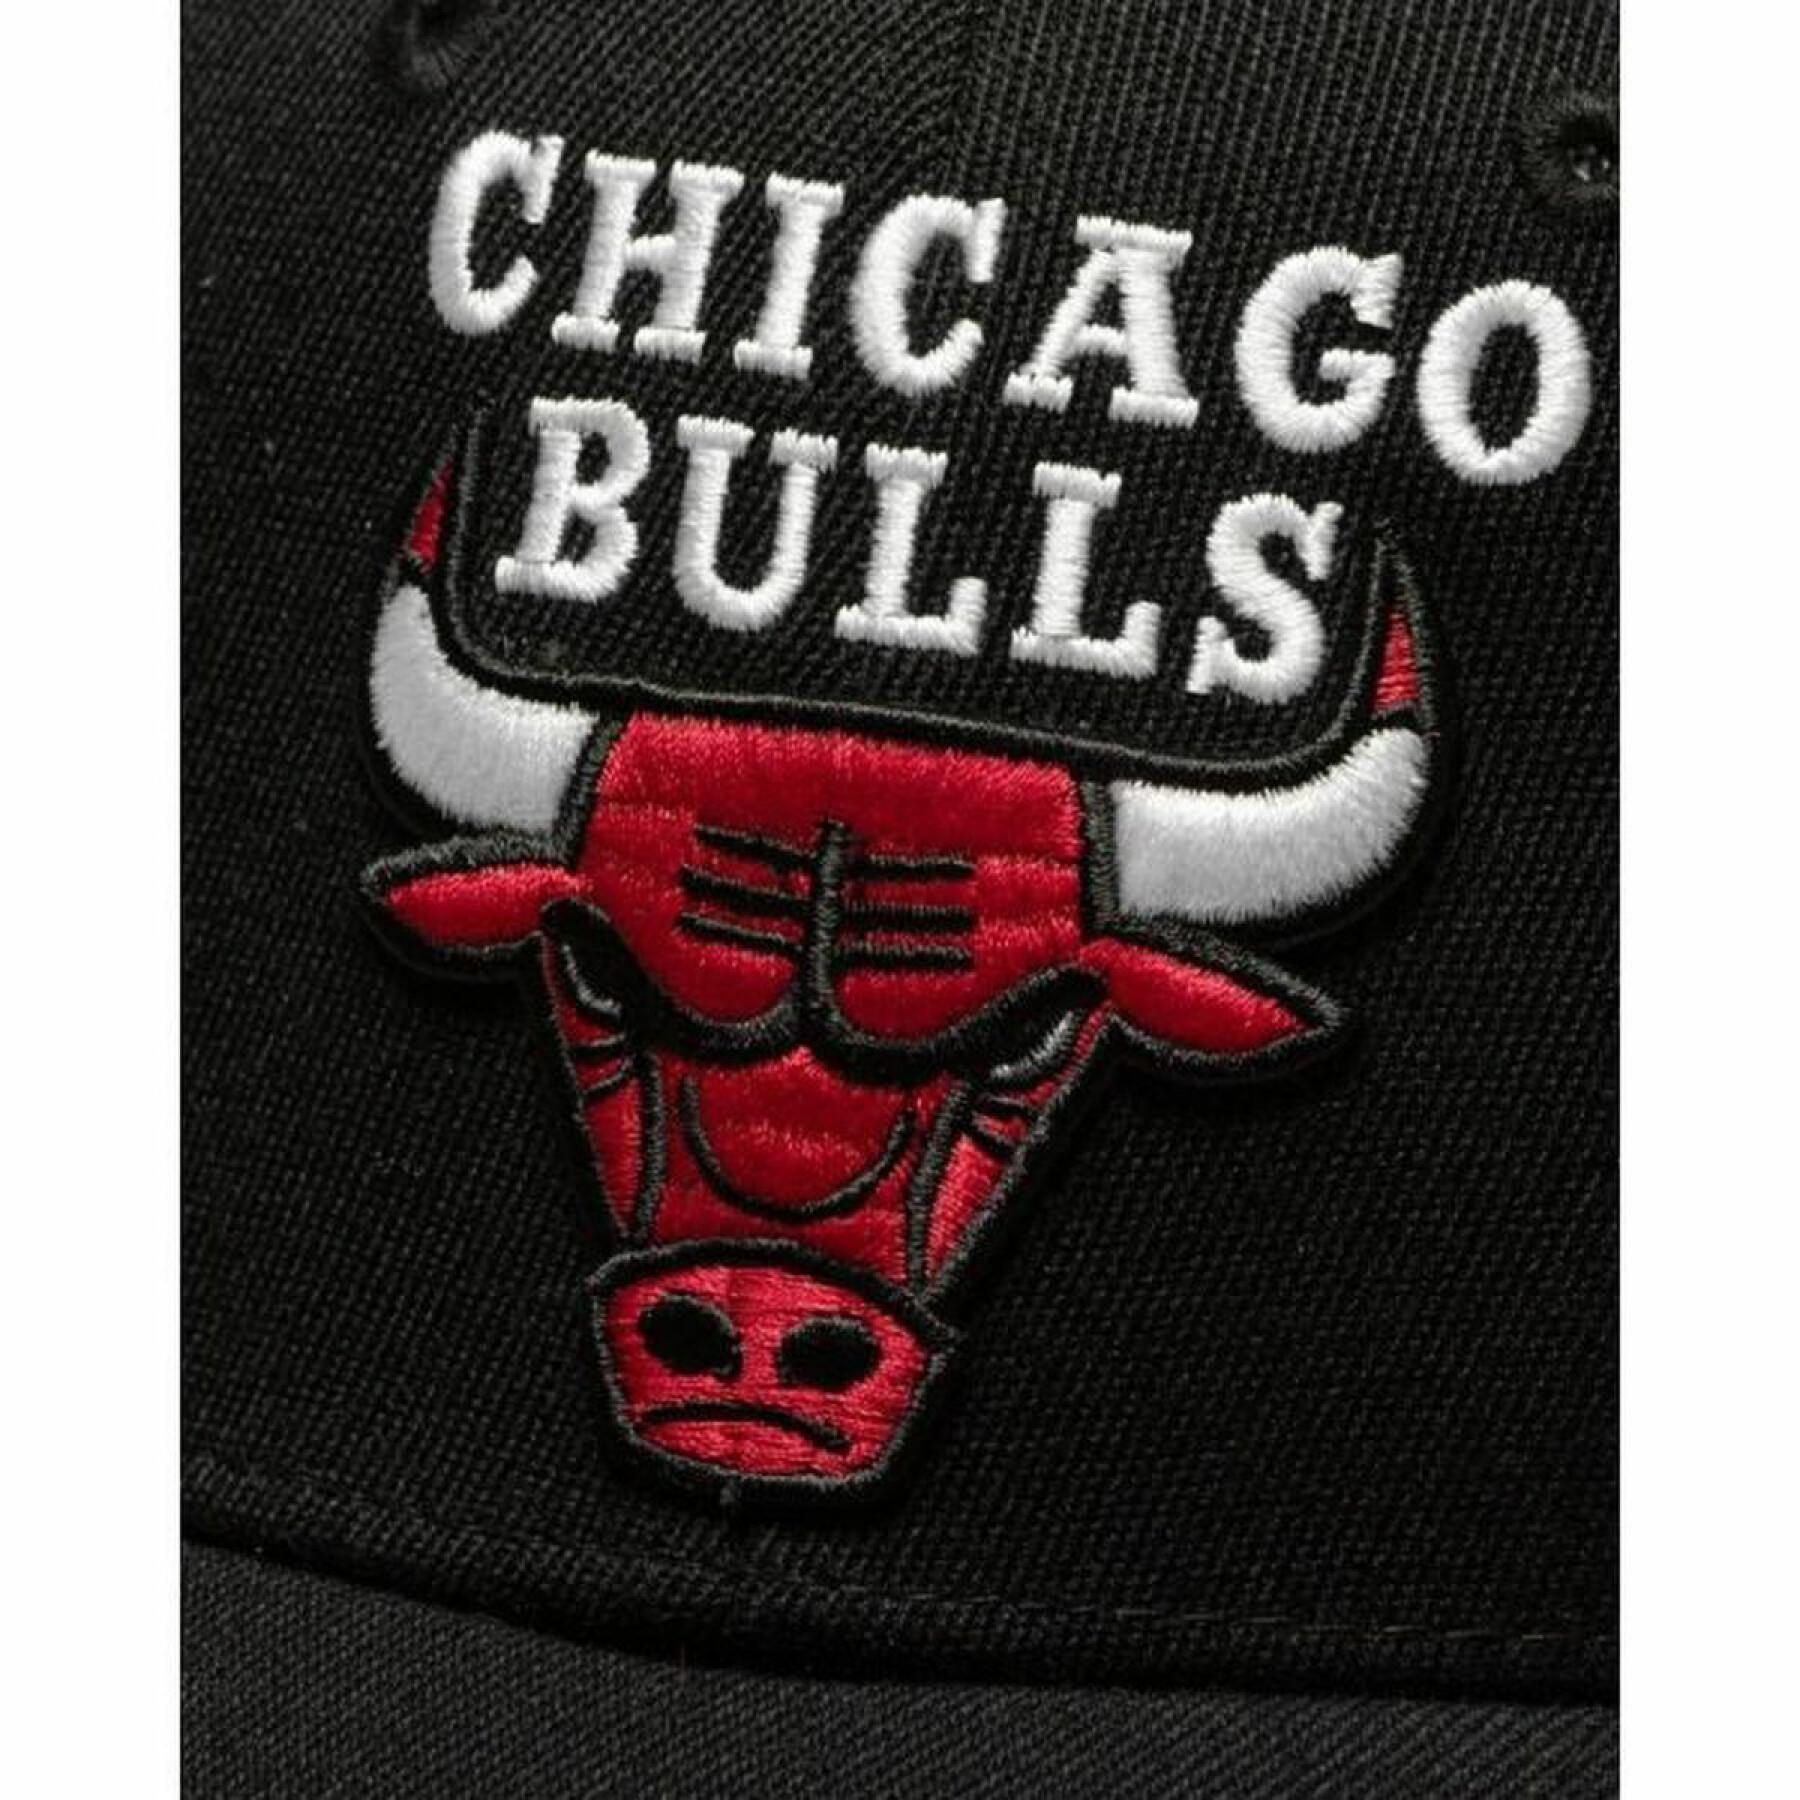 Snapback pet klassiek Chicago Bulls